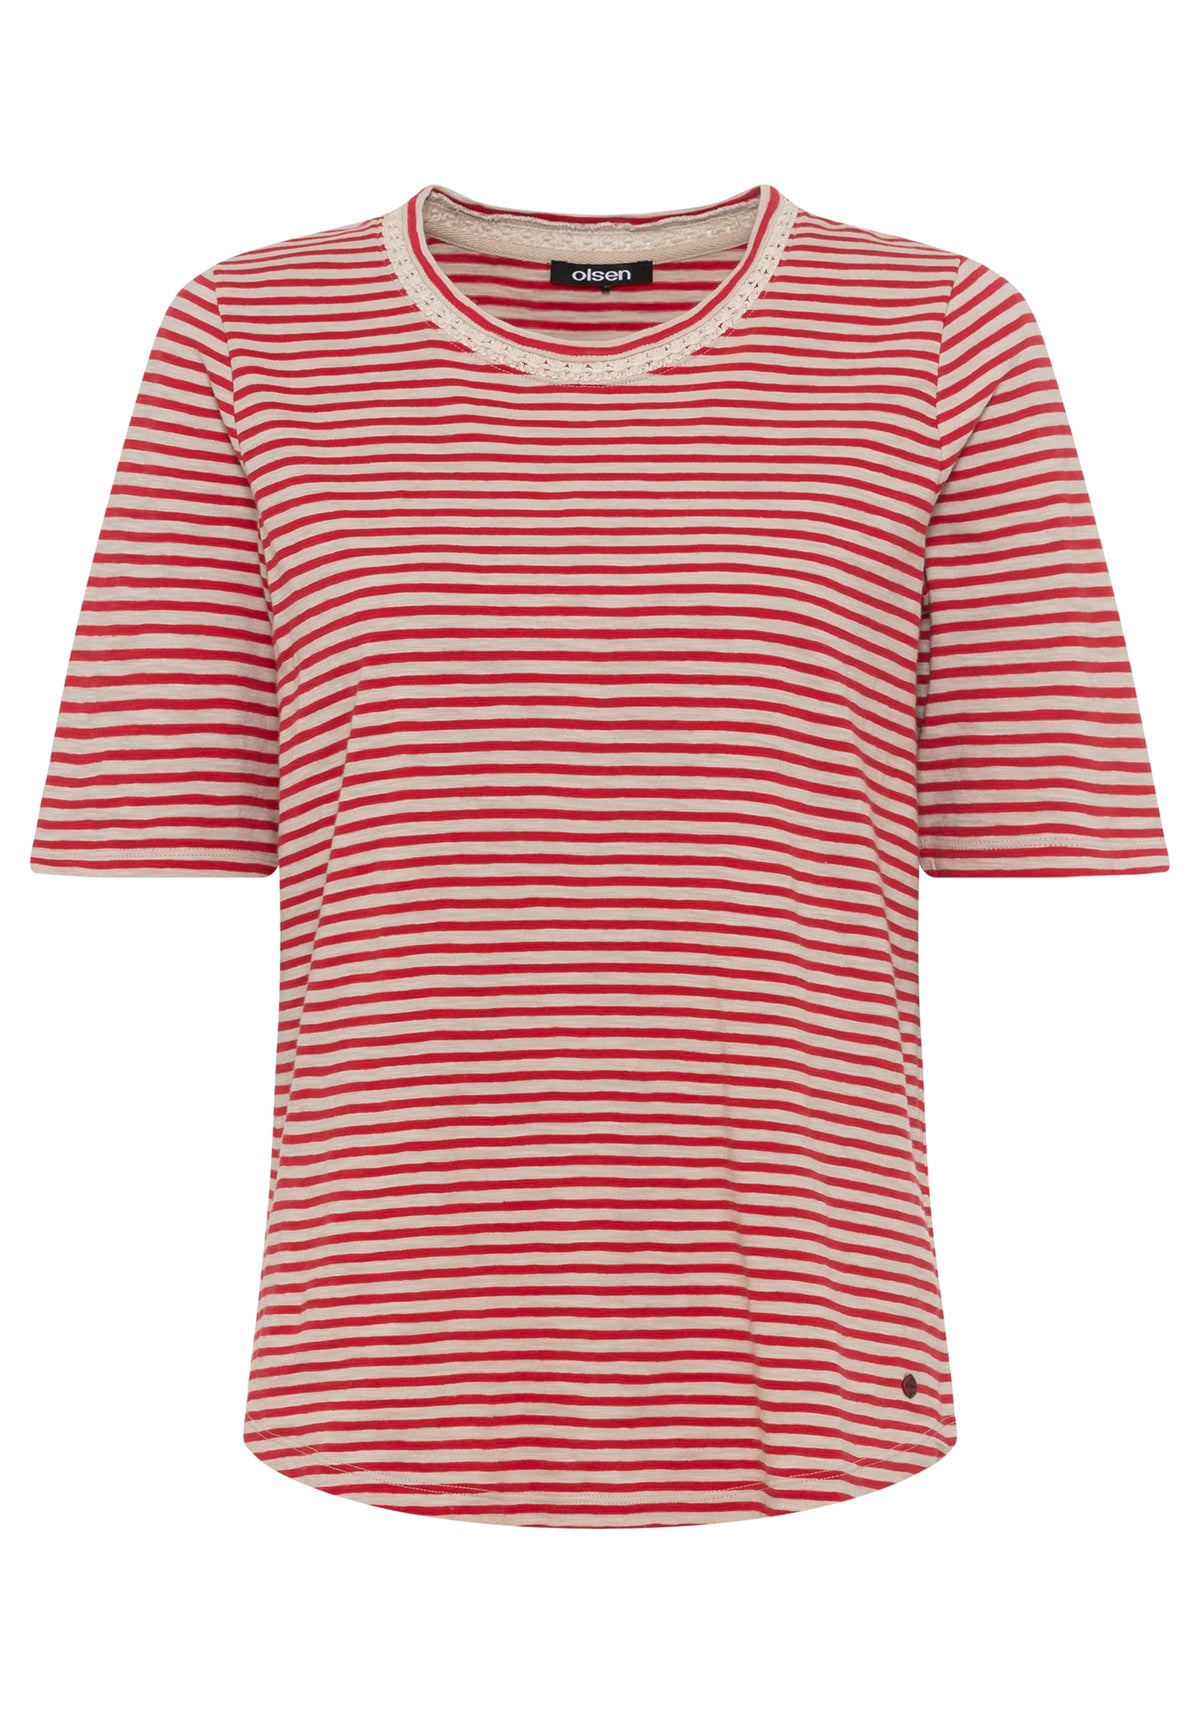 100% Cotton Short Sleeve Striped T-Shirt